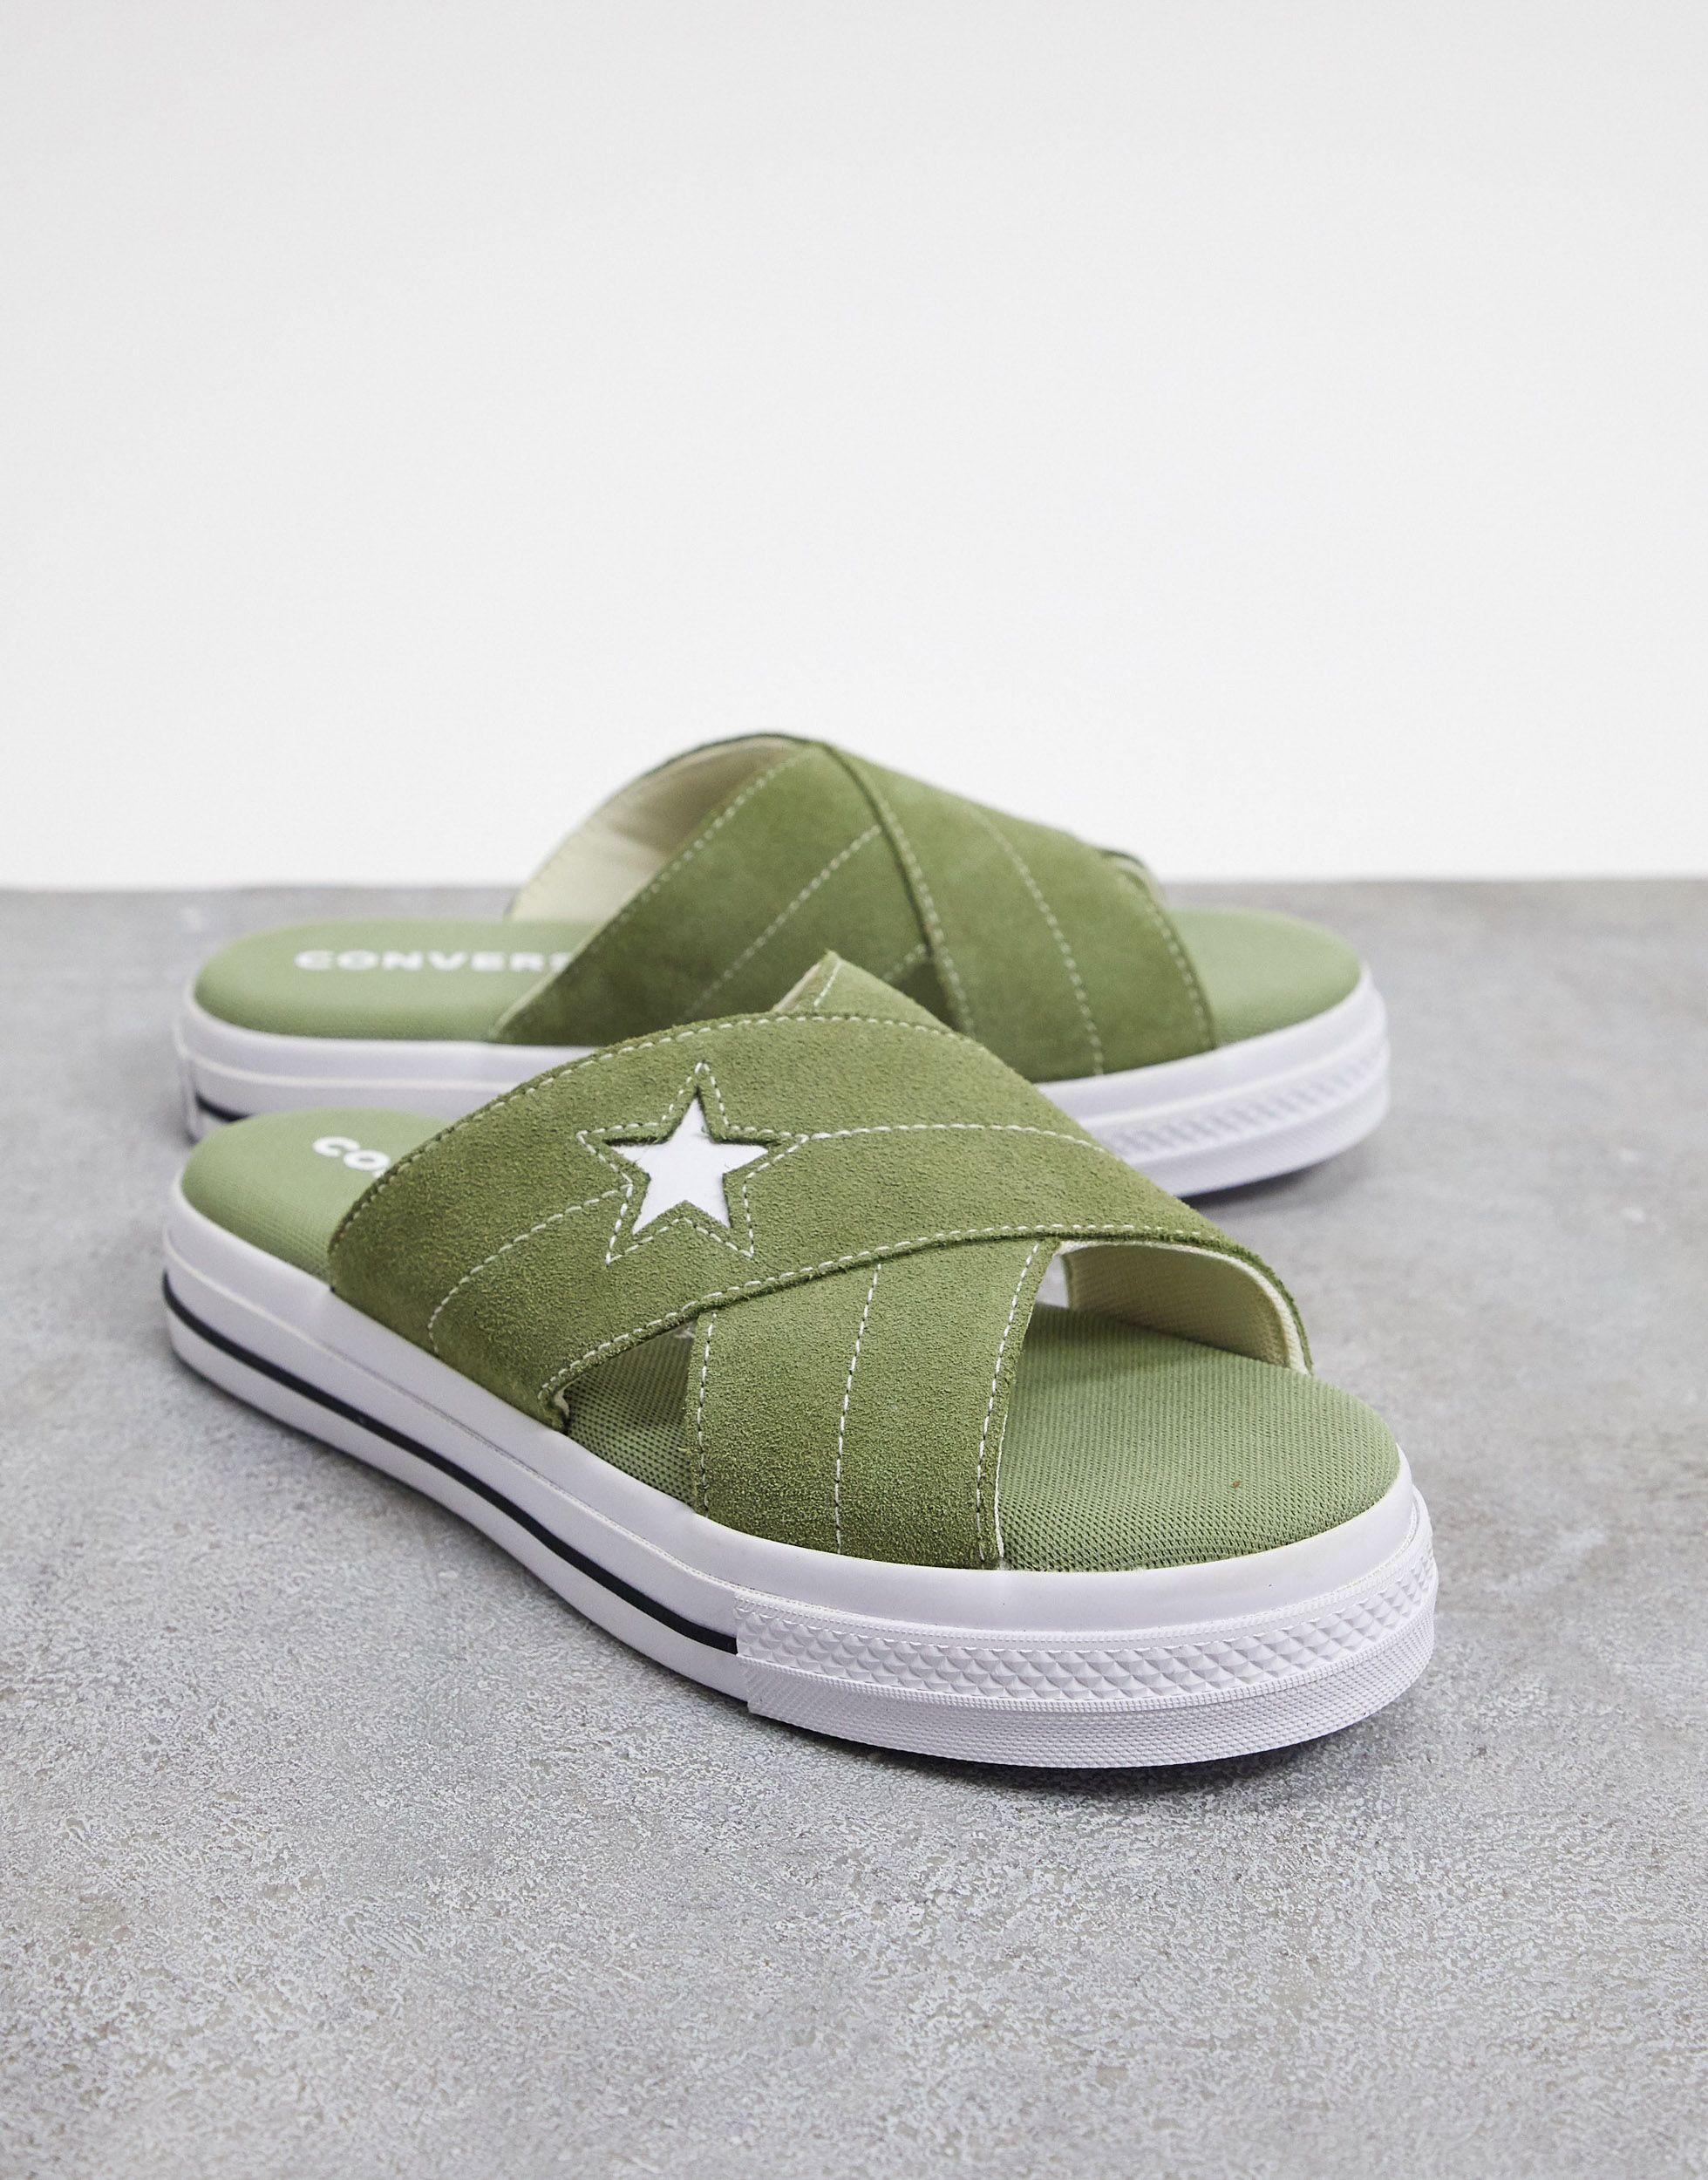 Converse One Star Khaki Green Sandals - Lyst